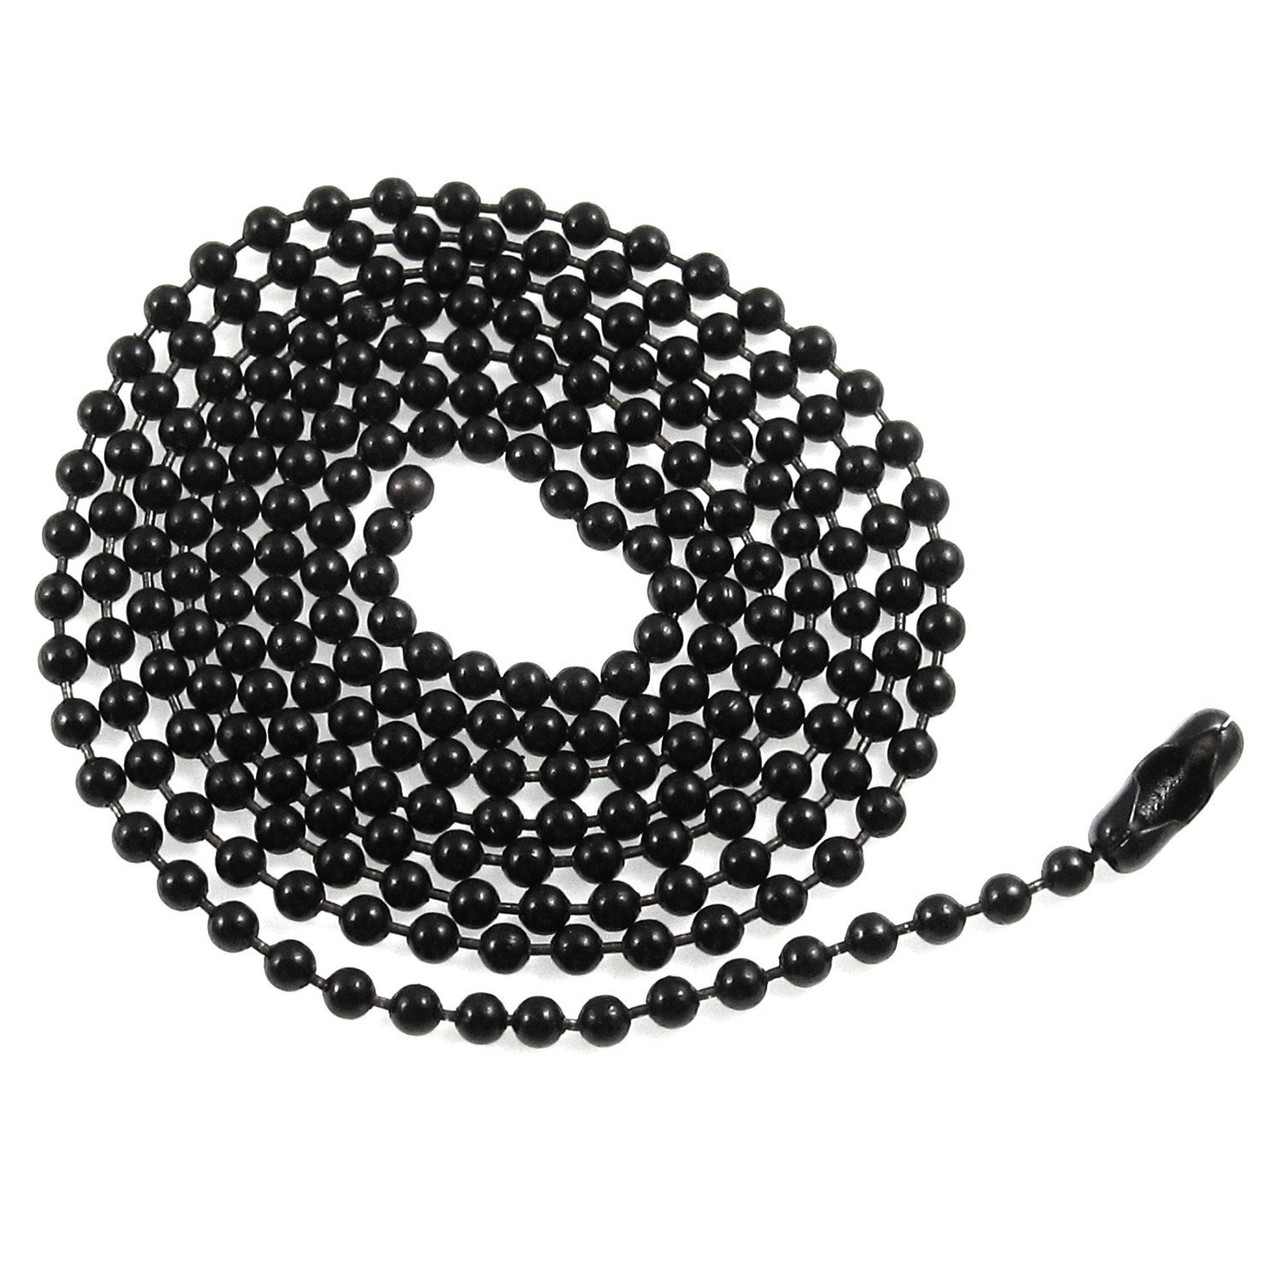 Leather Back Belt Clip US New York Police Badge Holder Necklace Chaining